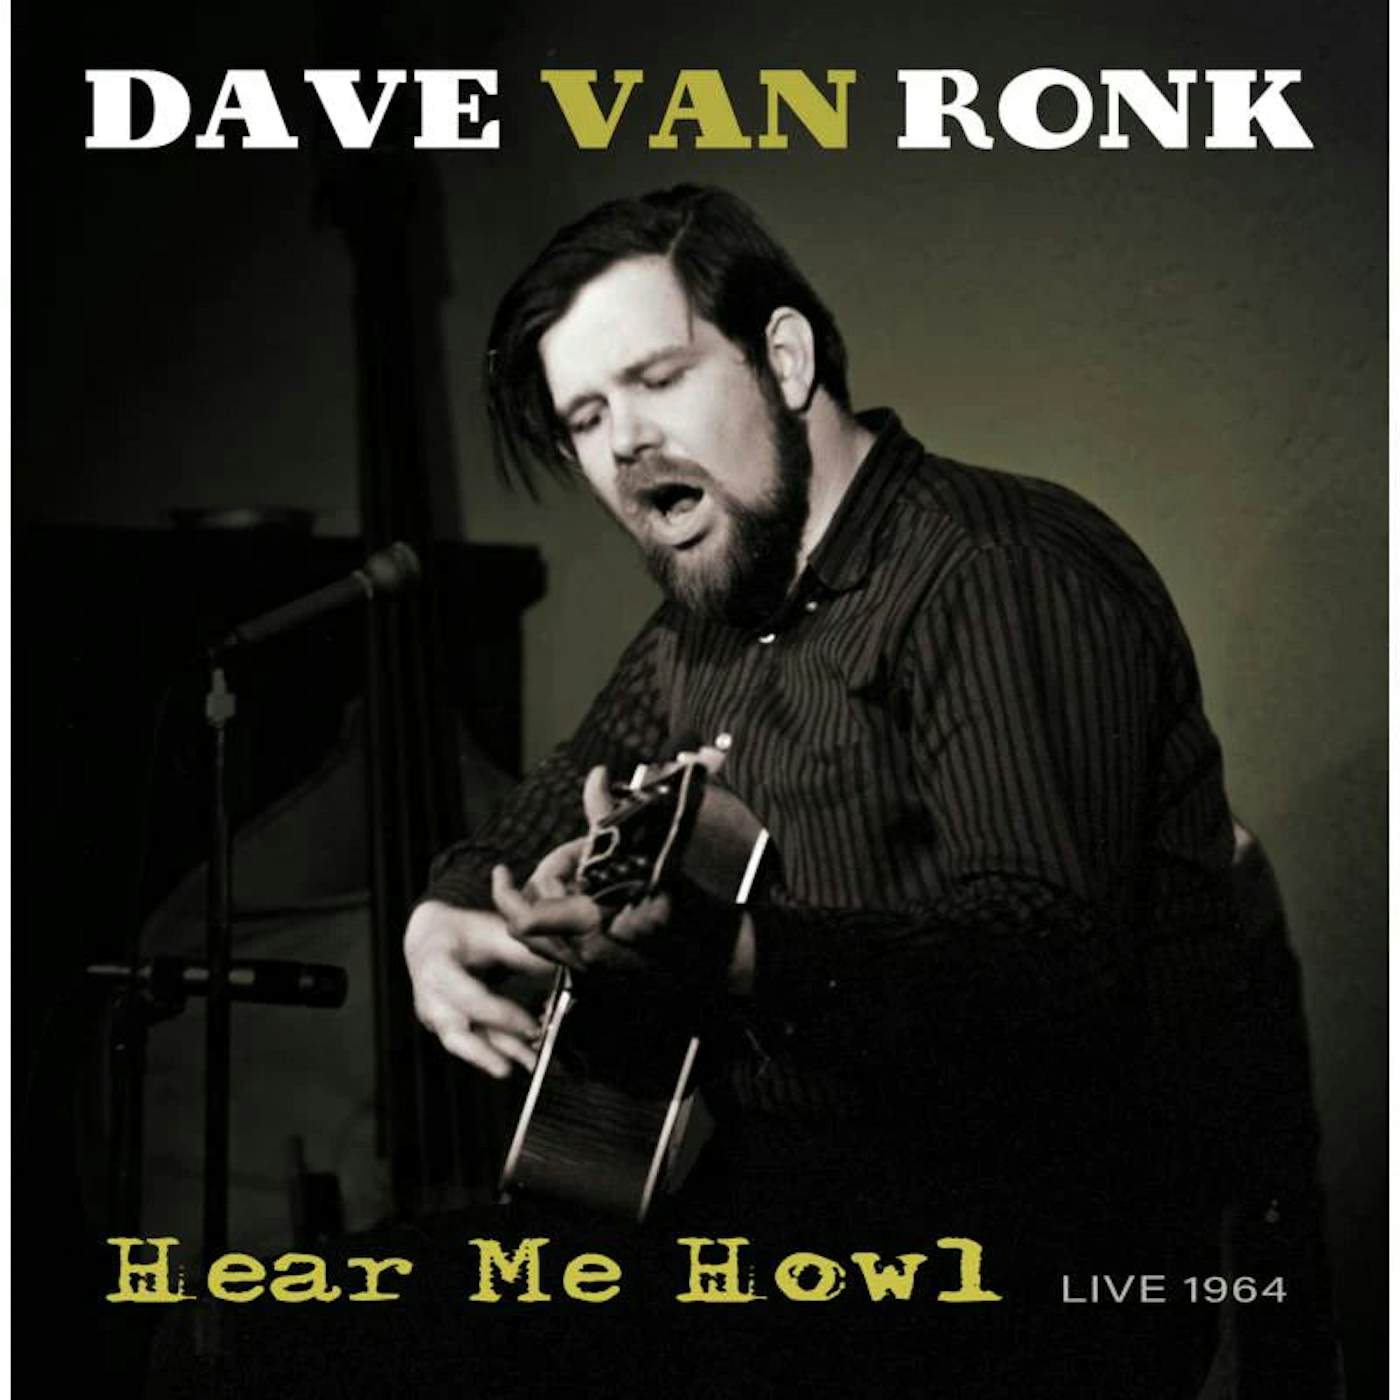 Dave Van Ronk LP - Hear Me Howl Live 1964 (Vinyl)